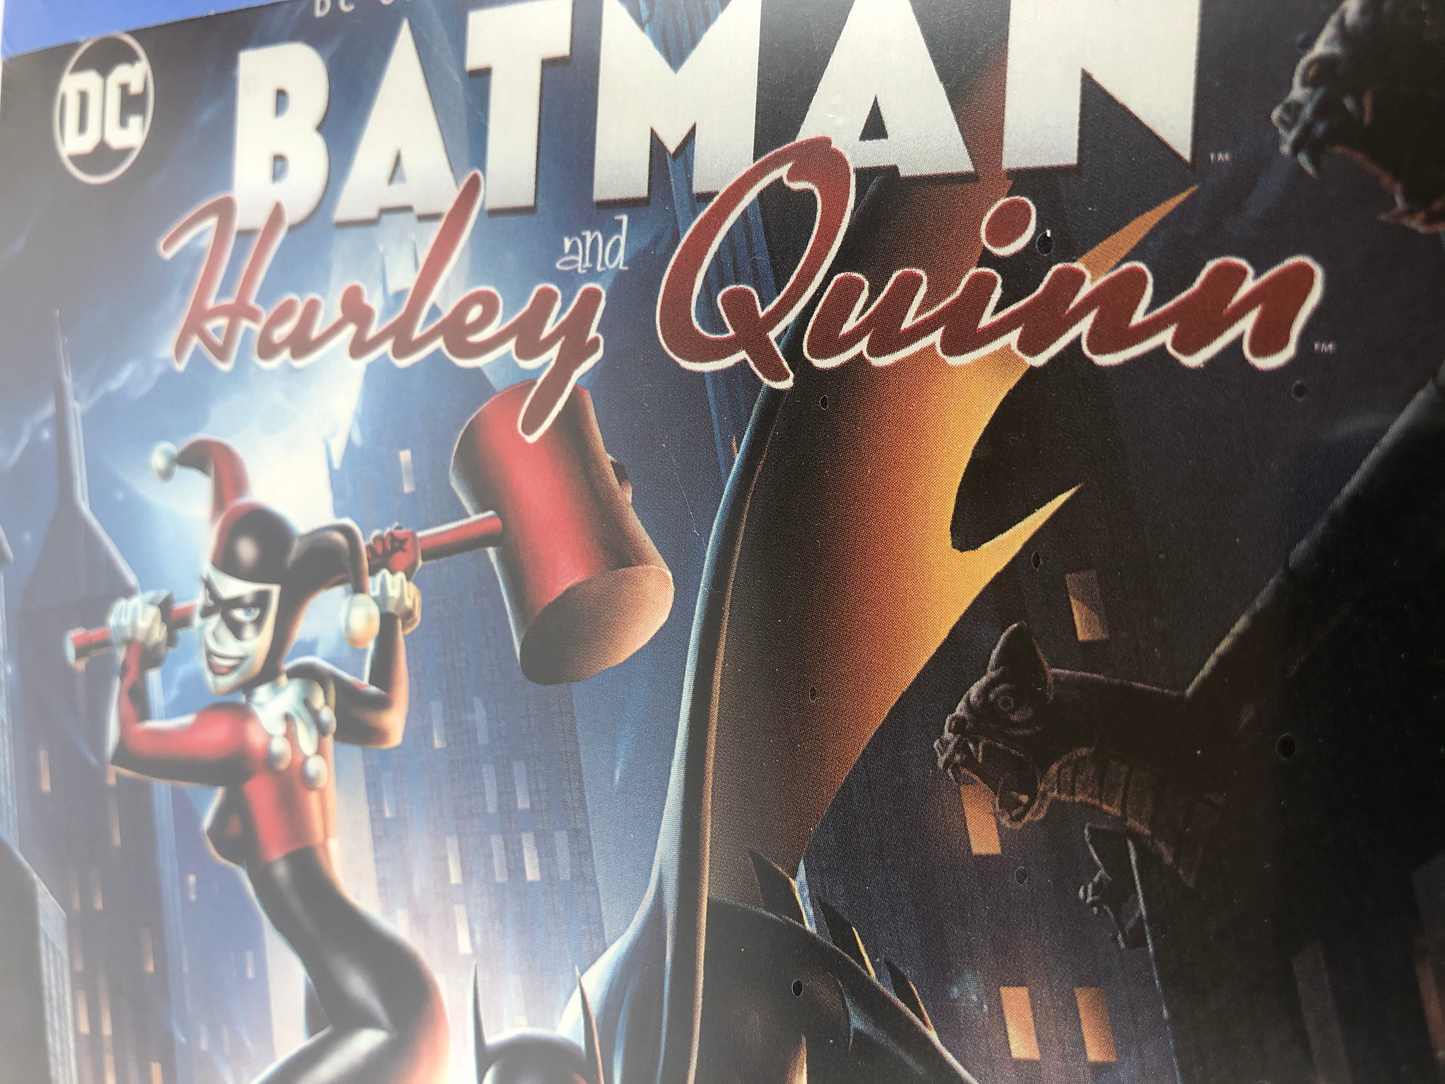 Batman And Harley Quinn Blu-Ray Steelbook **Very Light Scratch**